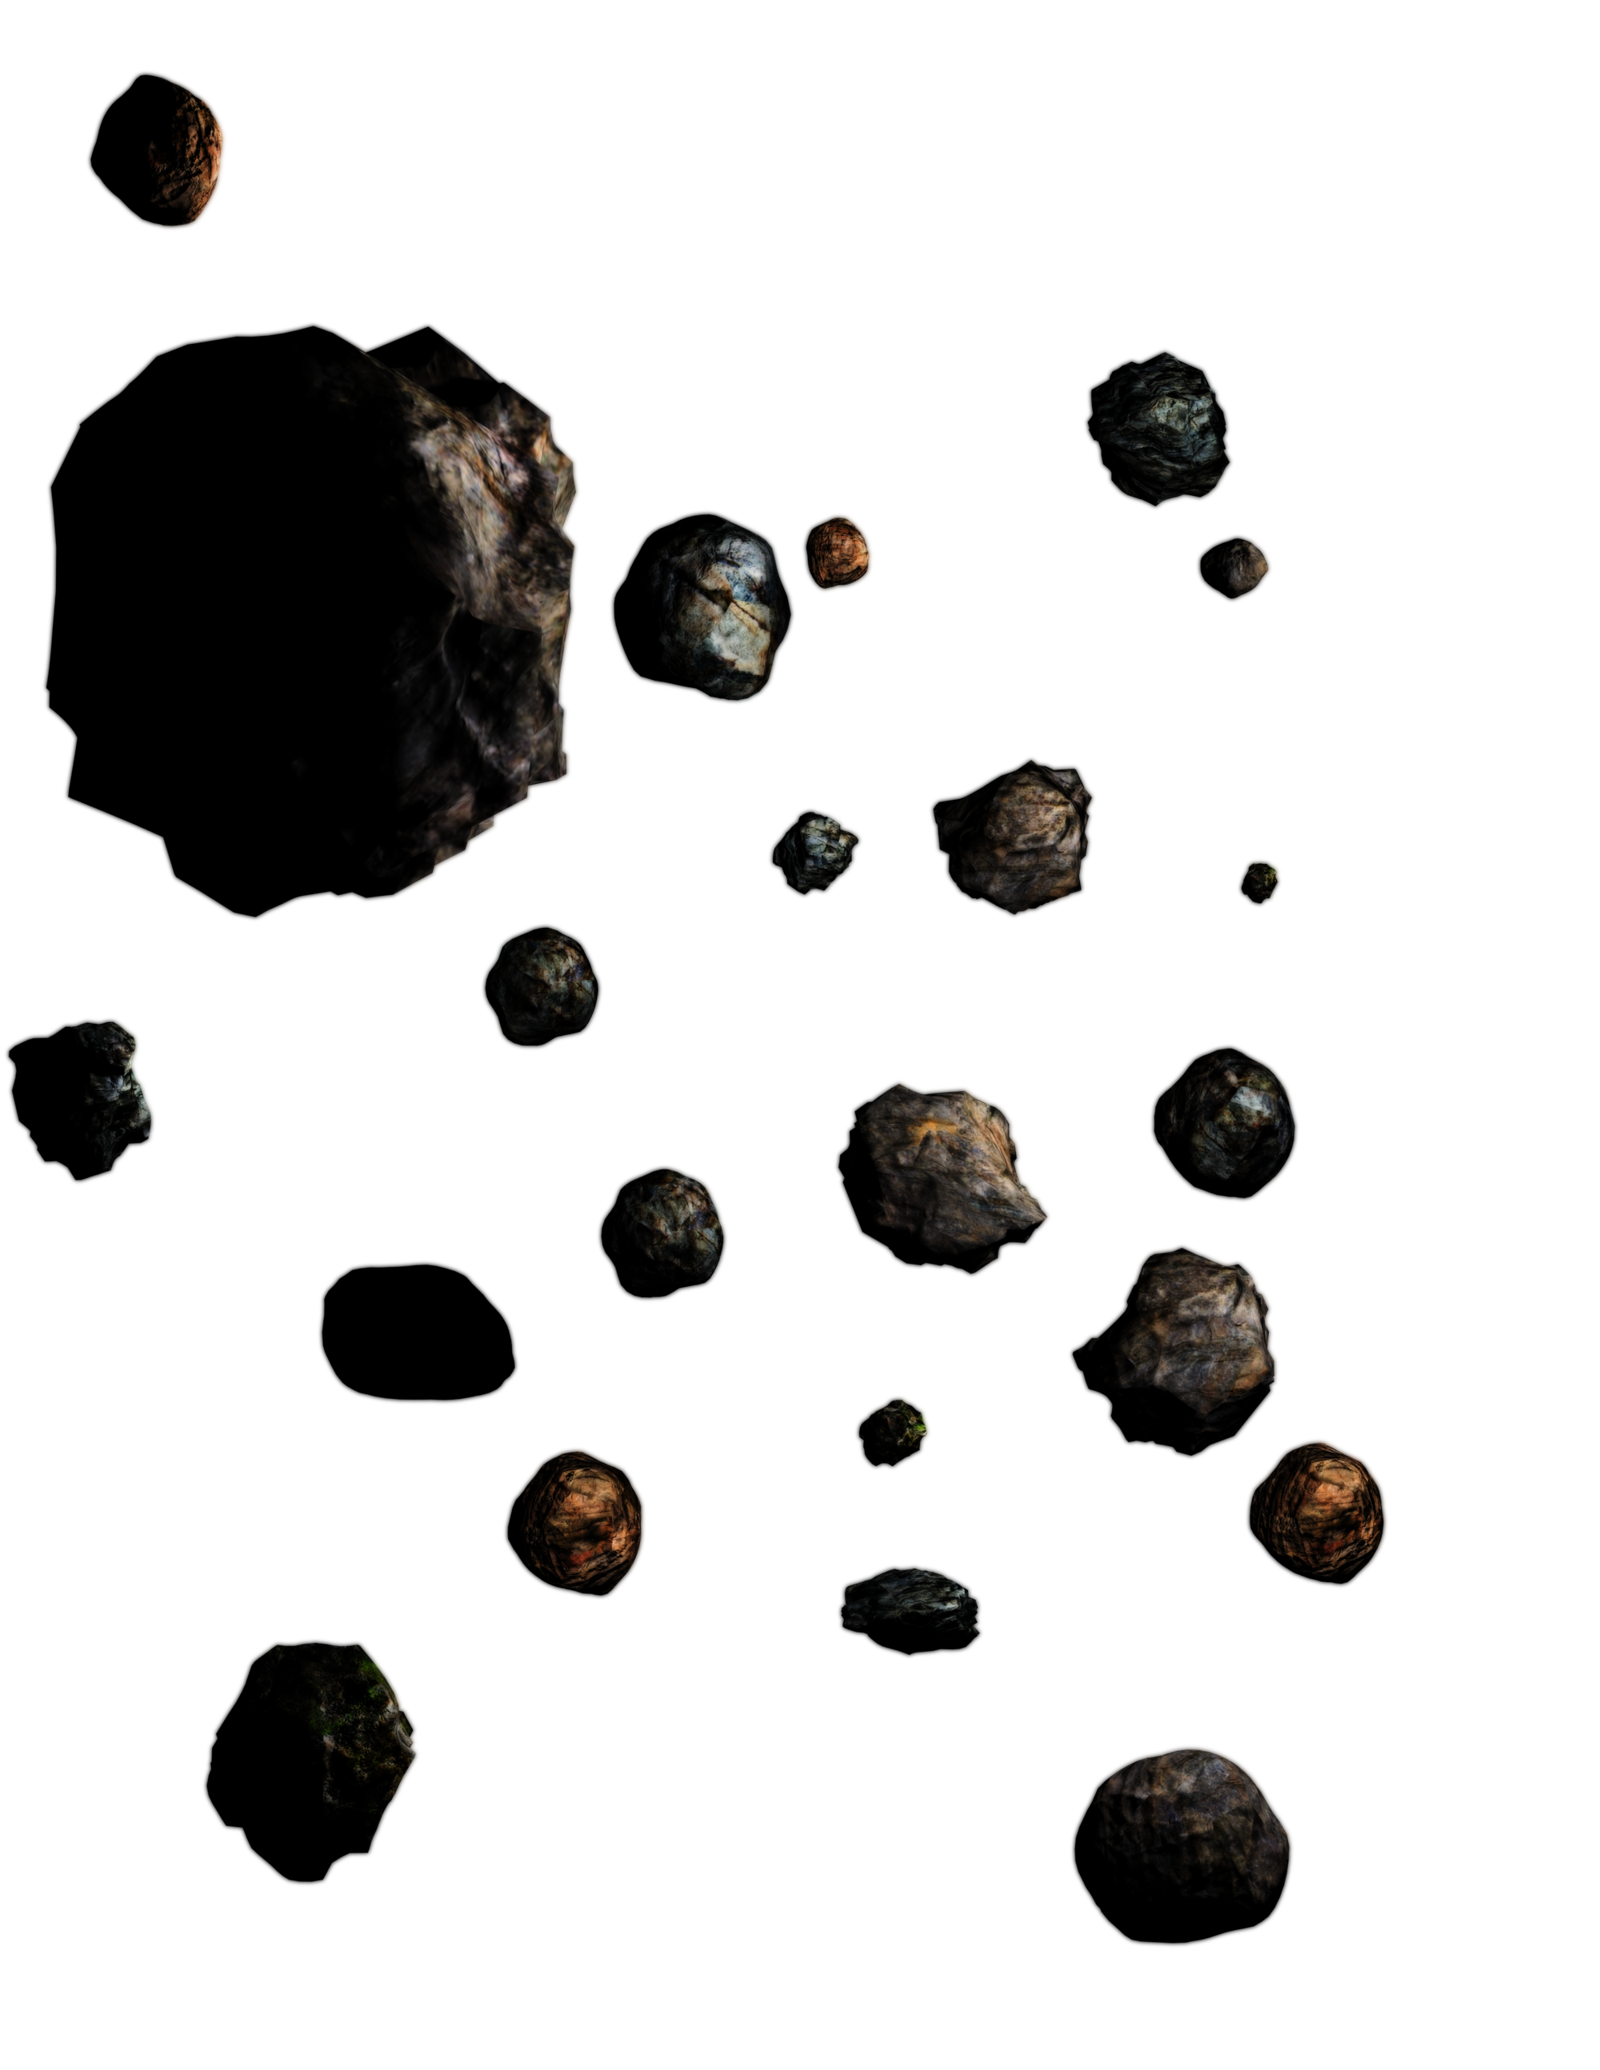 Meteor asteroide PNG imagen Transparente